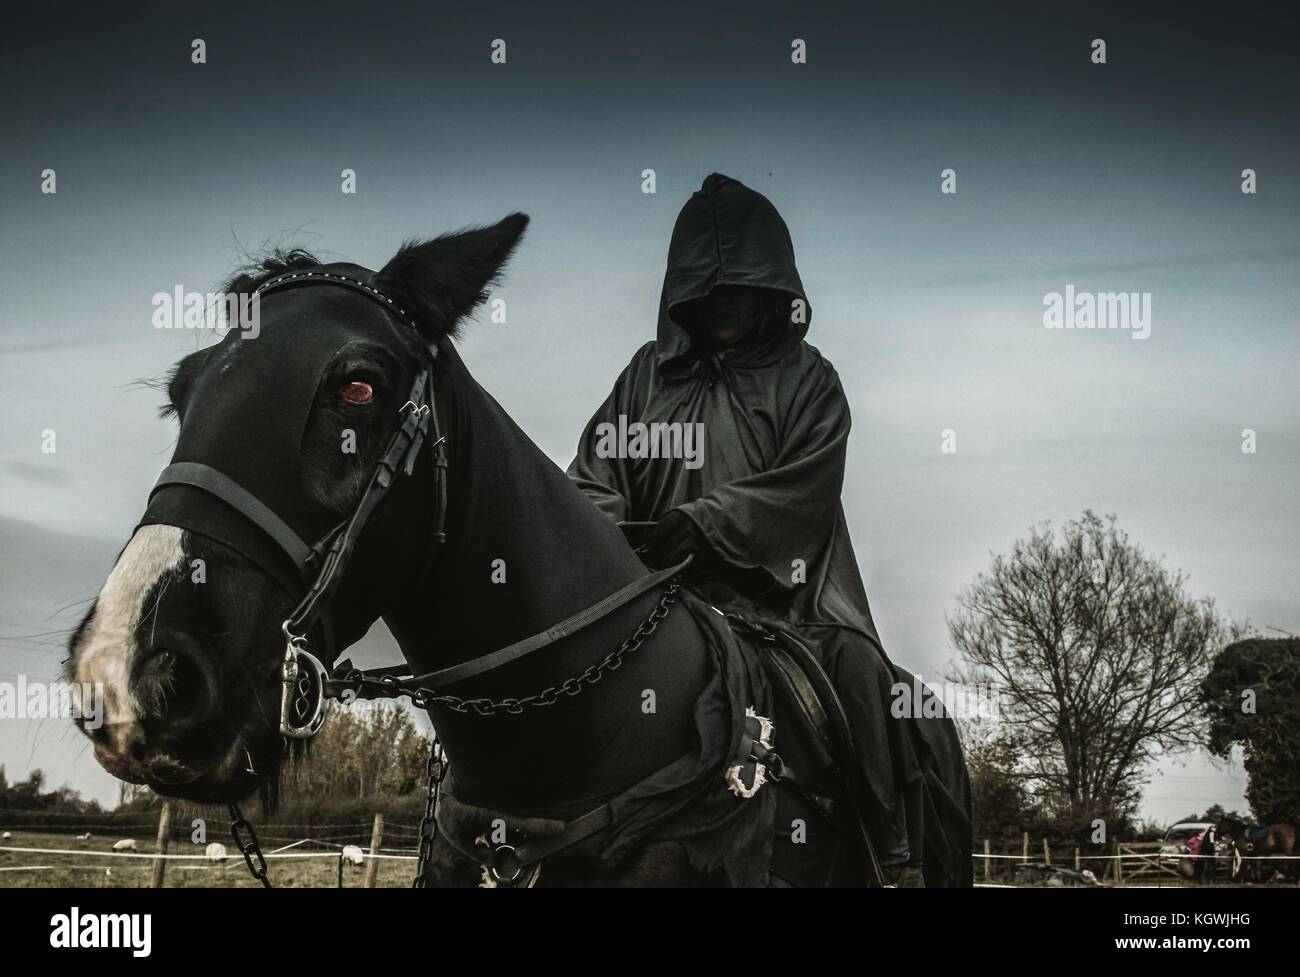 Hooded figure on horse back Stock Photo